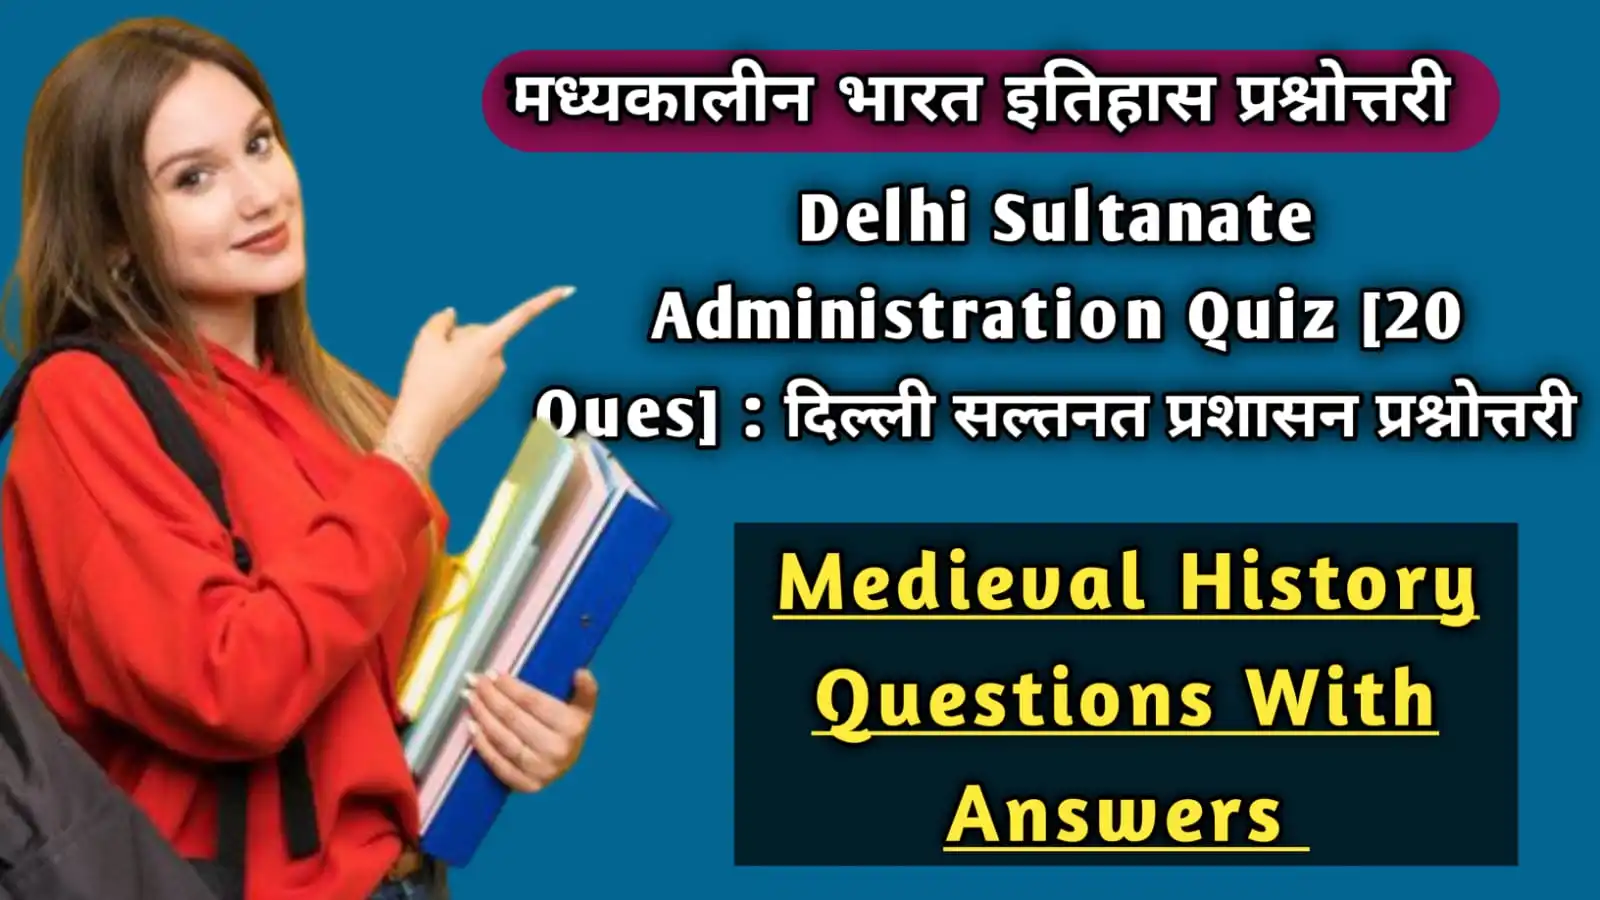 Delhi Sultanate Administration Quiz